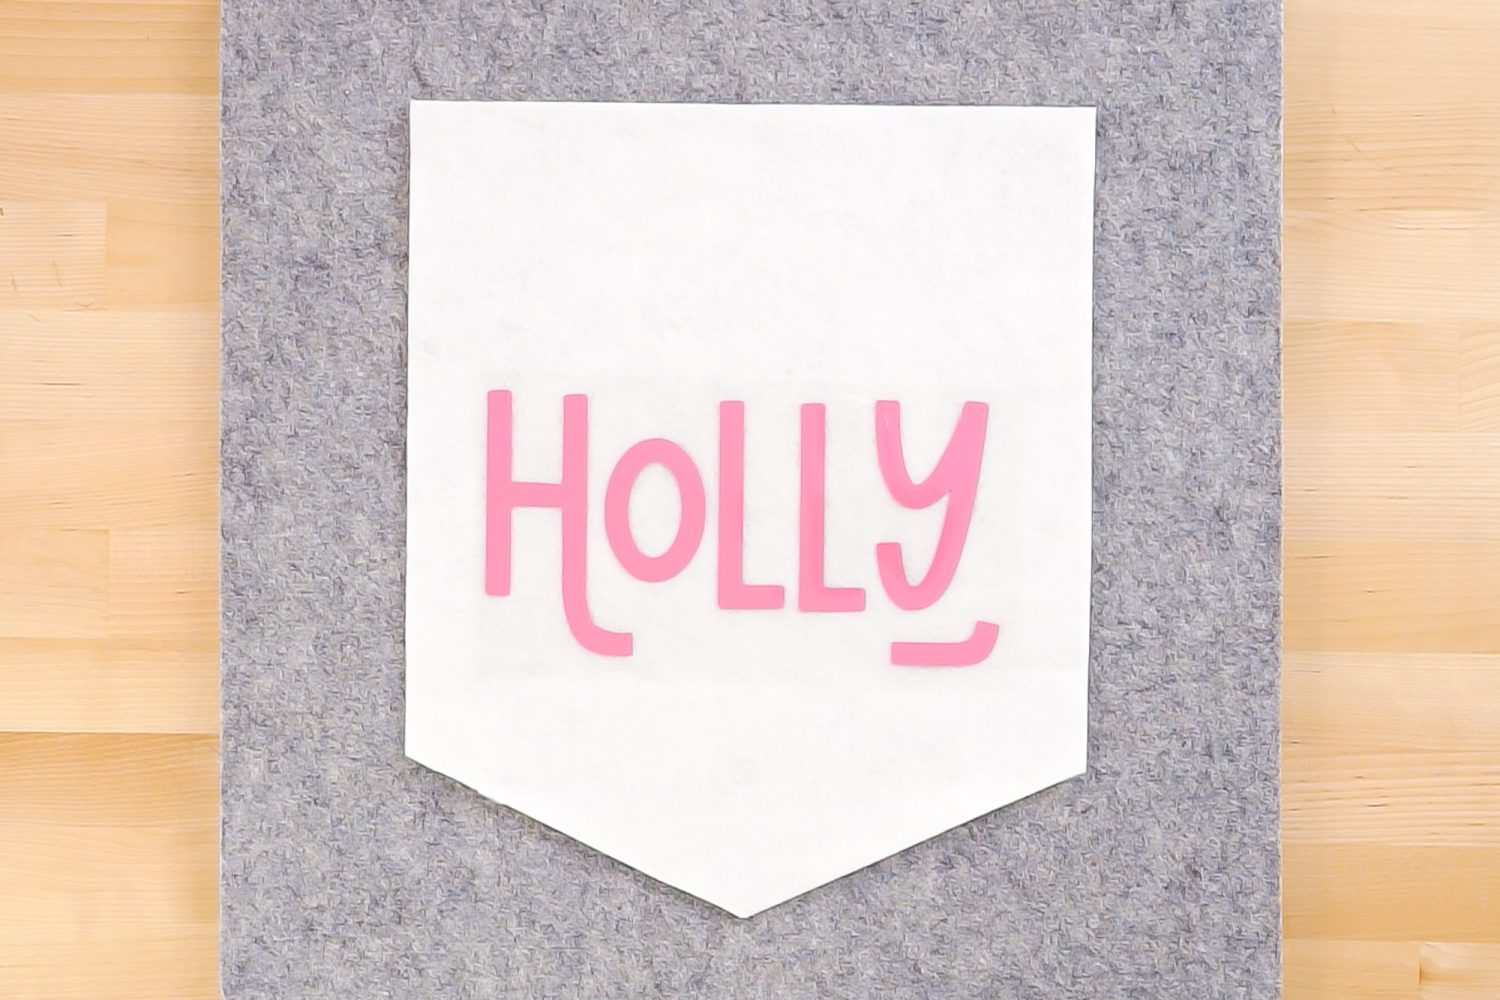 "Holly" decal alone on felt Christmas banner